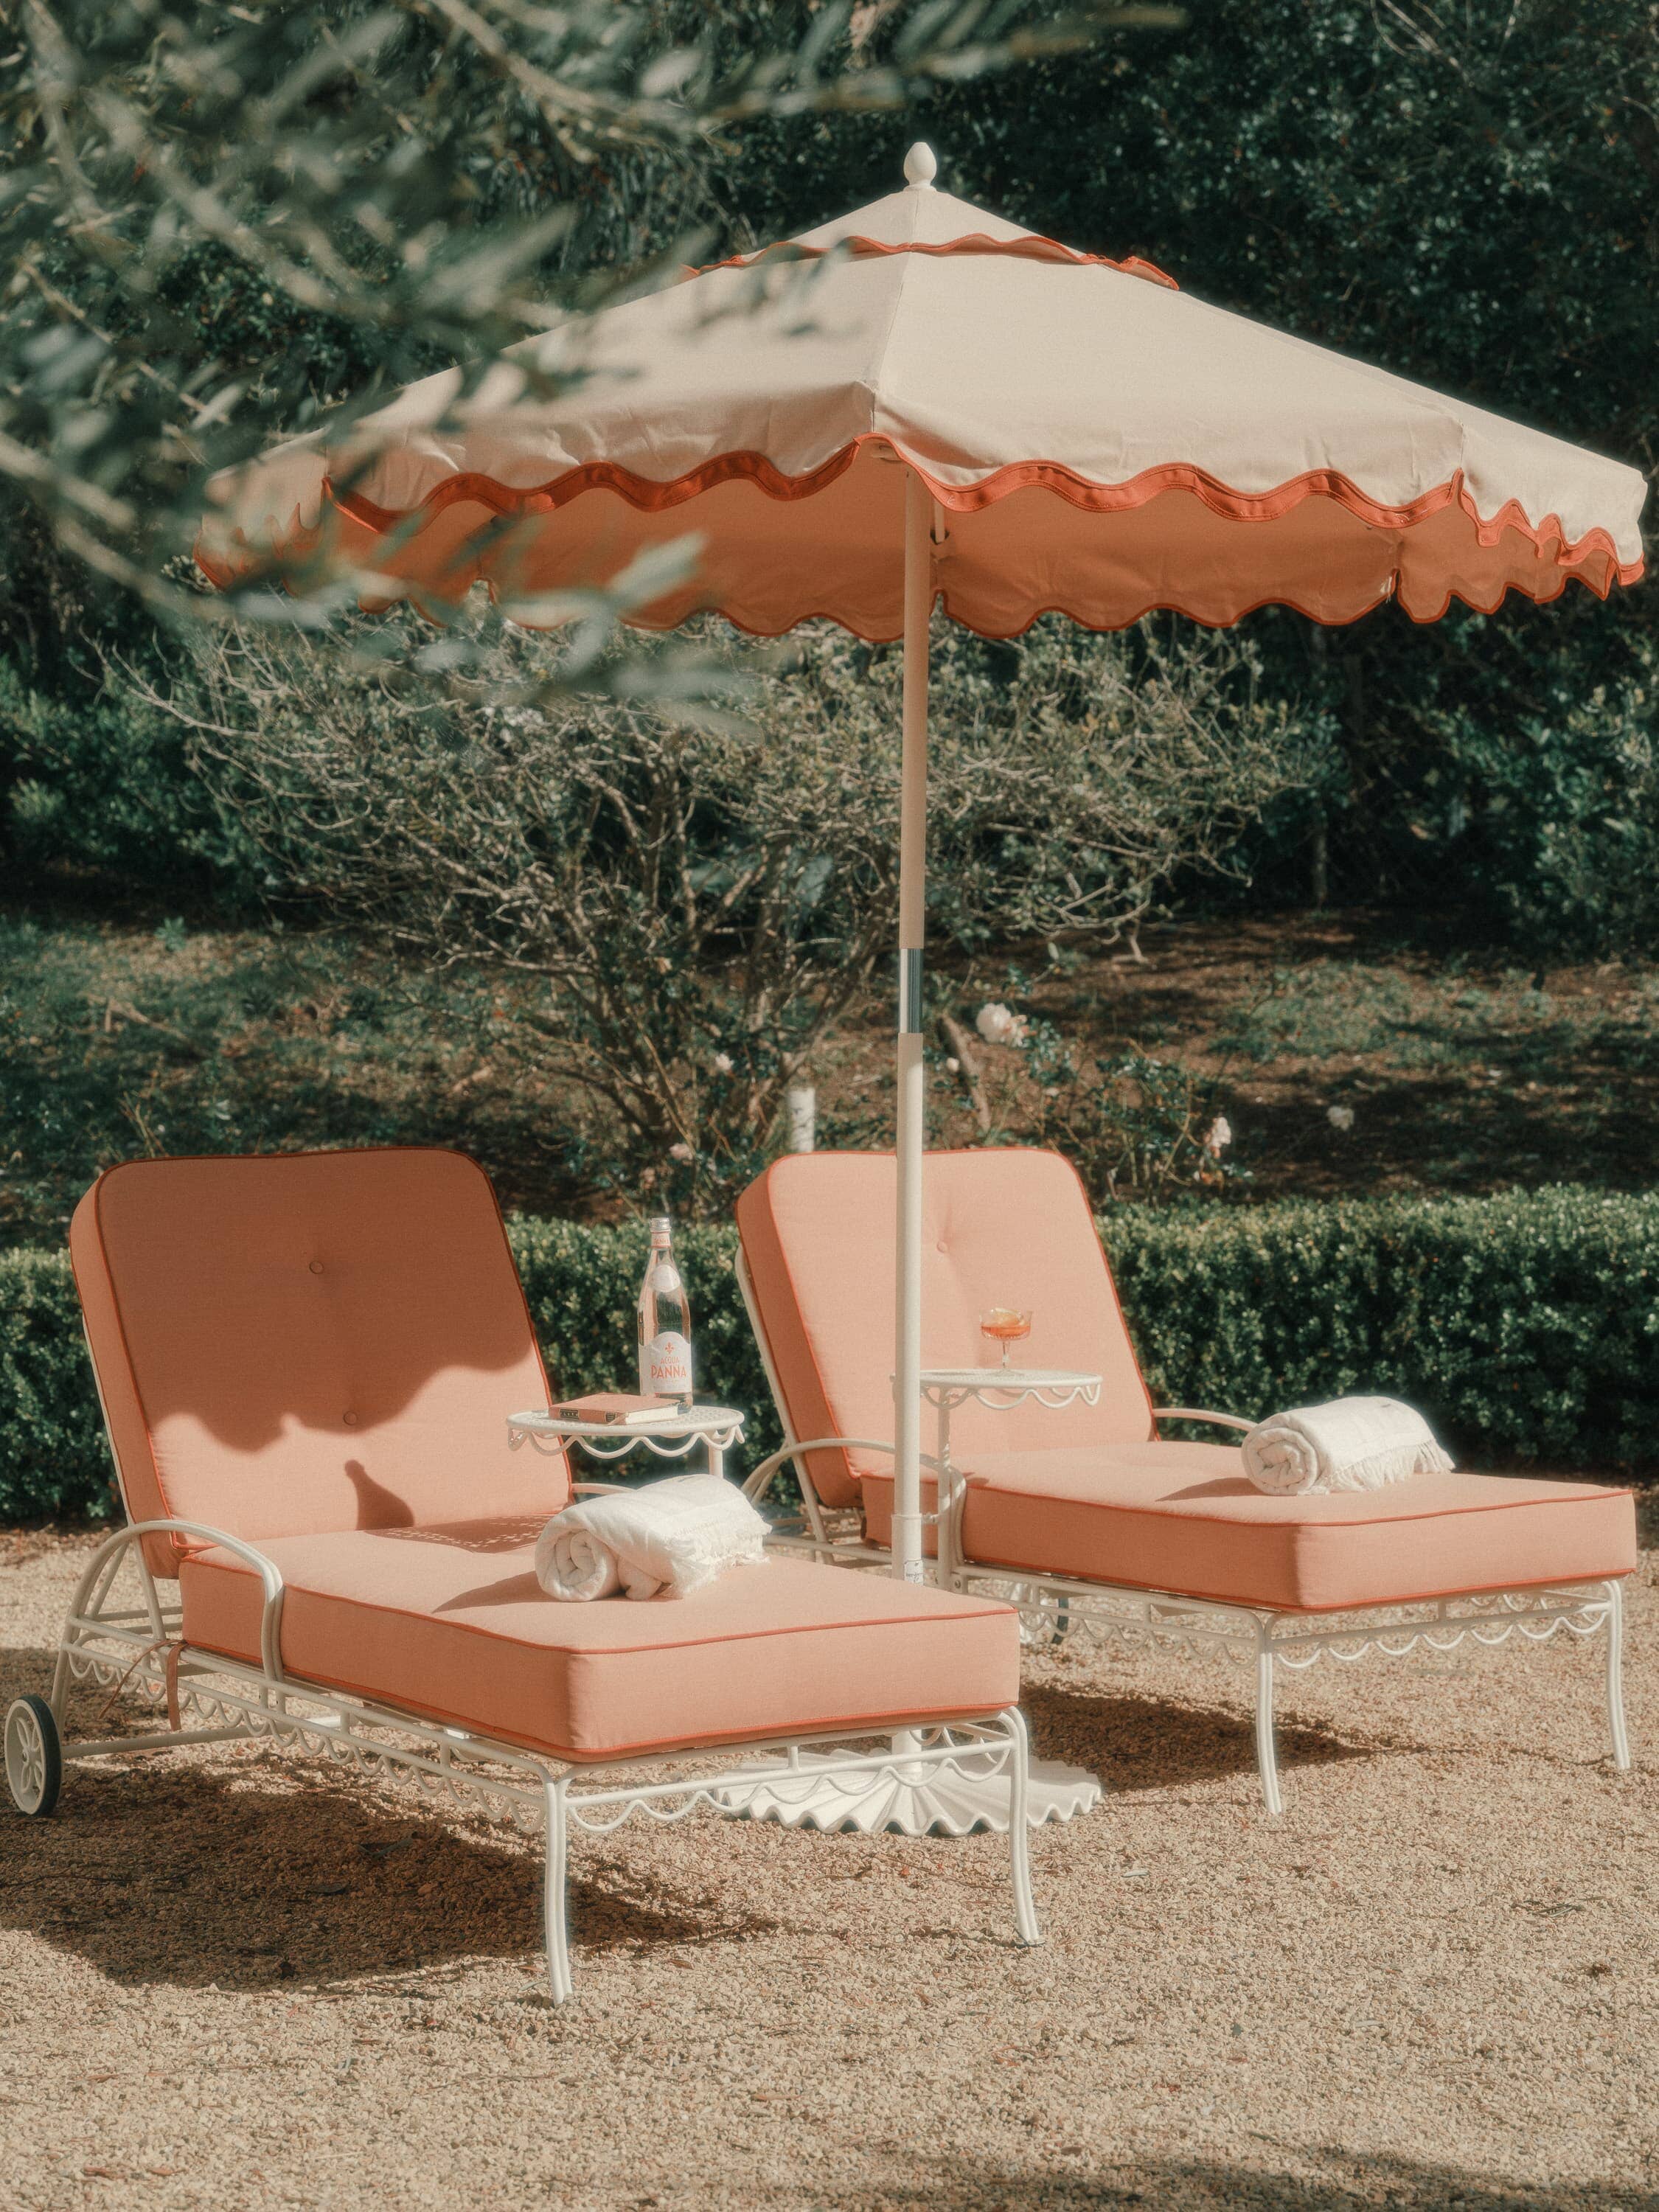 Riviera pink market umbrellas and sun loungers in a garden